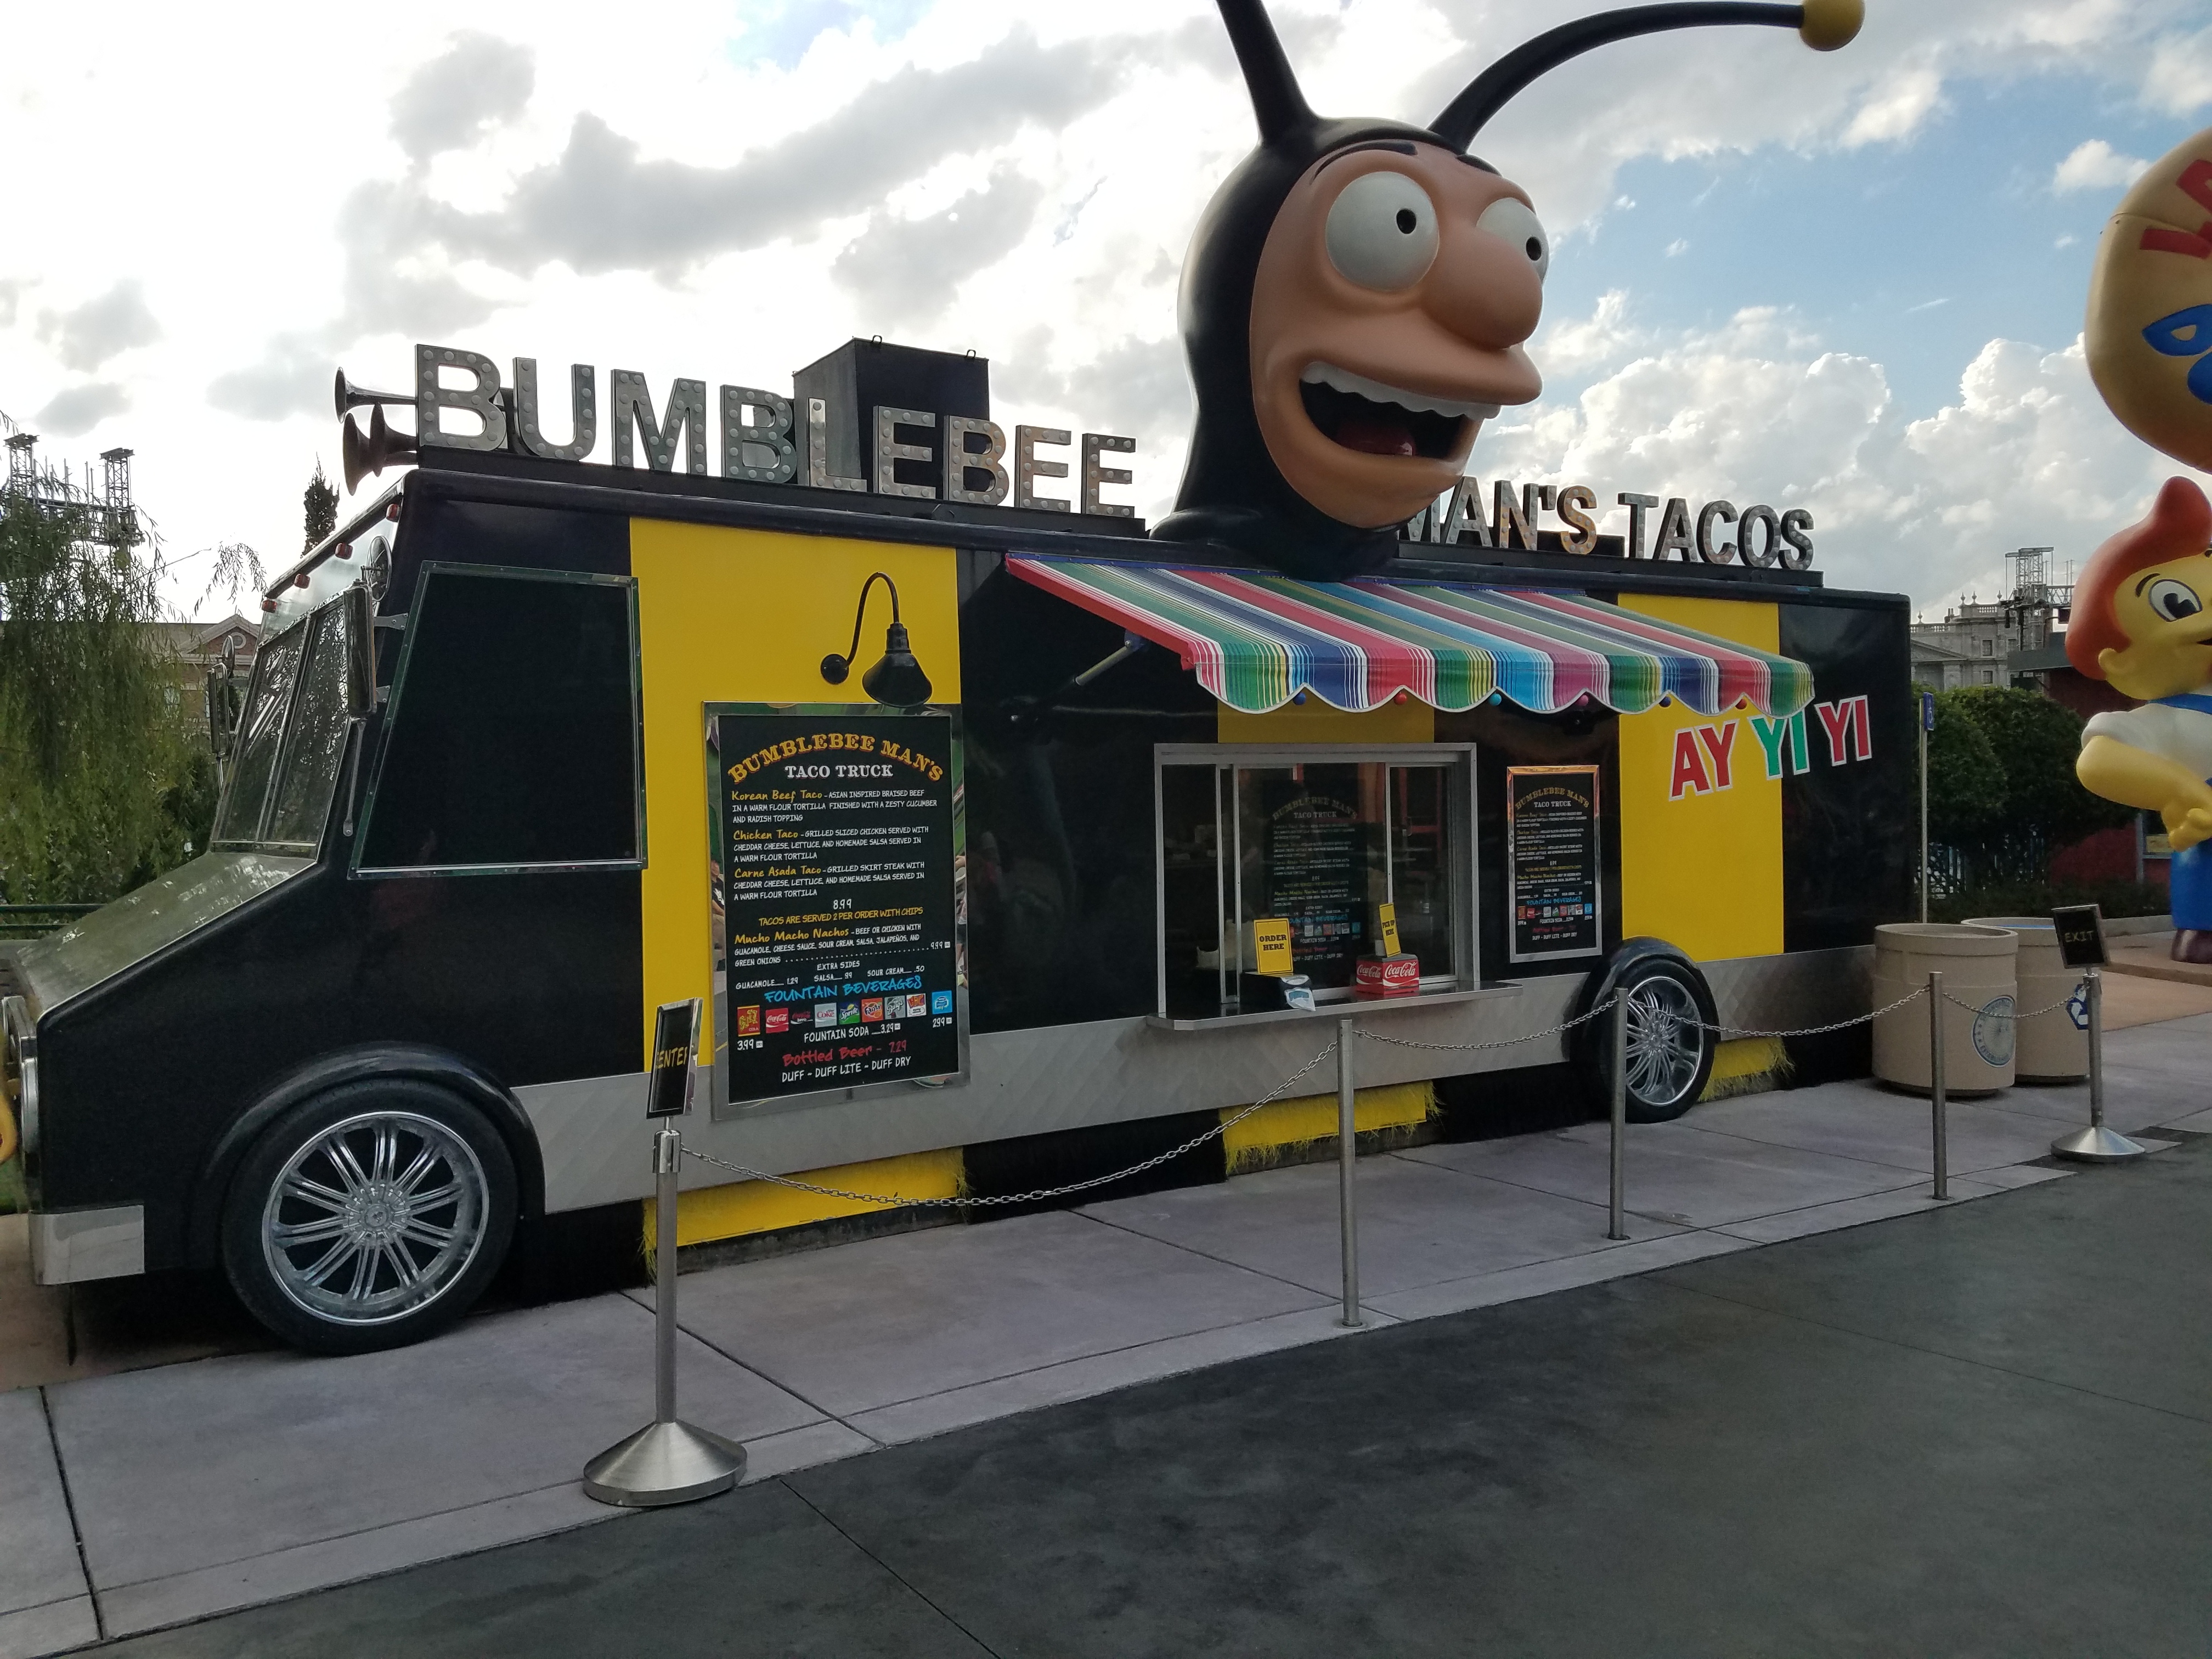 Bumblebee Mans tacos - Simpsons - Universal Studios - Food truck - Universal Orlando resort - dining review - unofficialuniversal.com